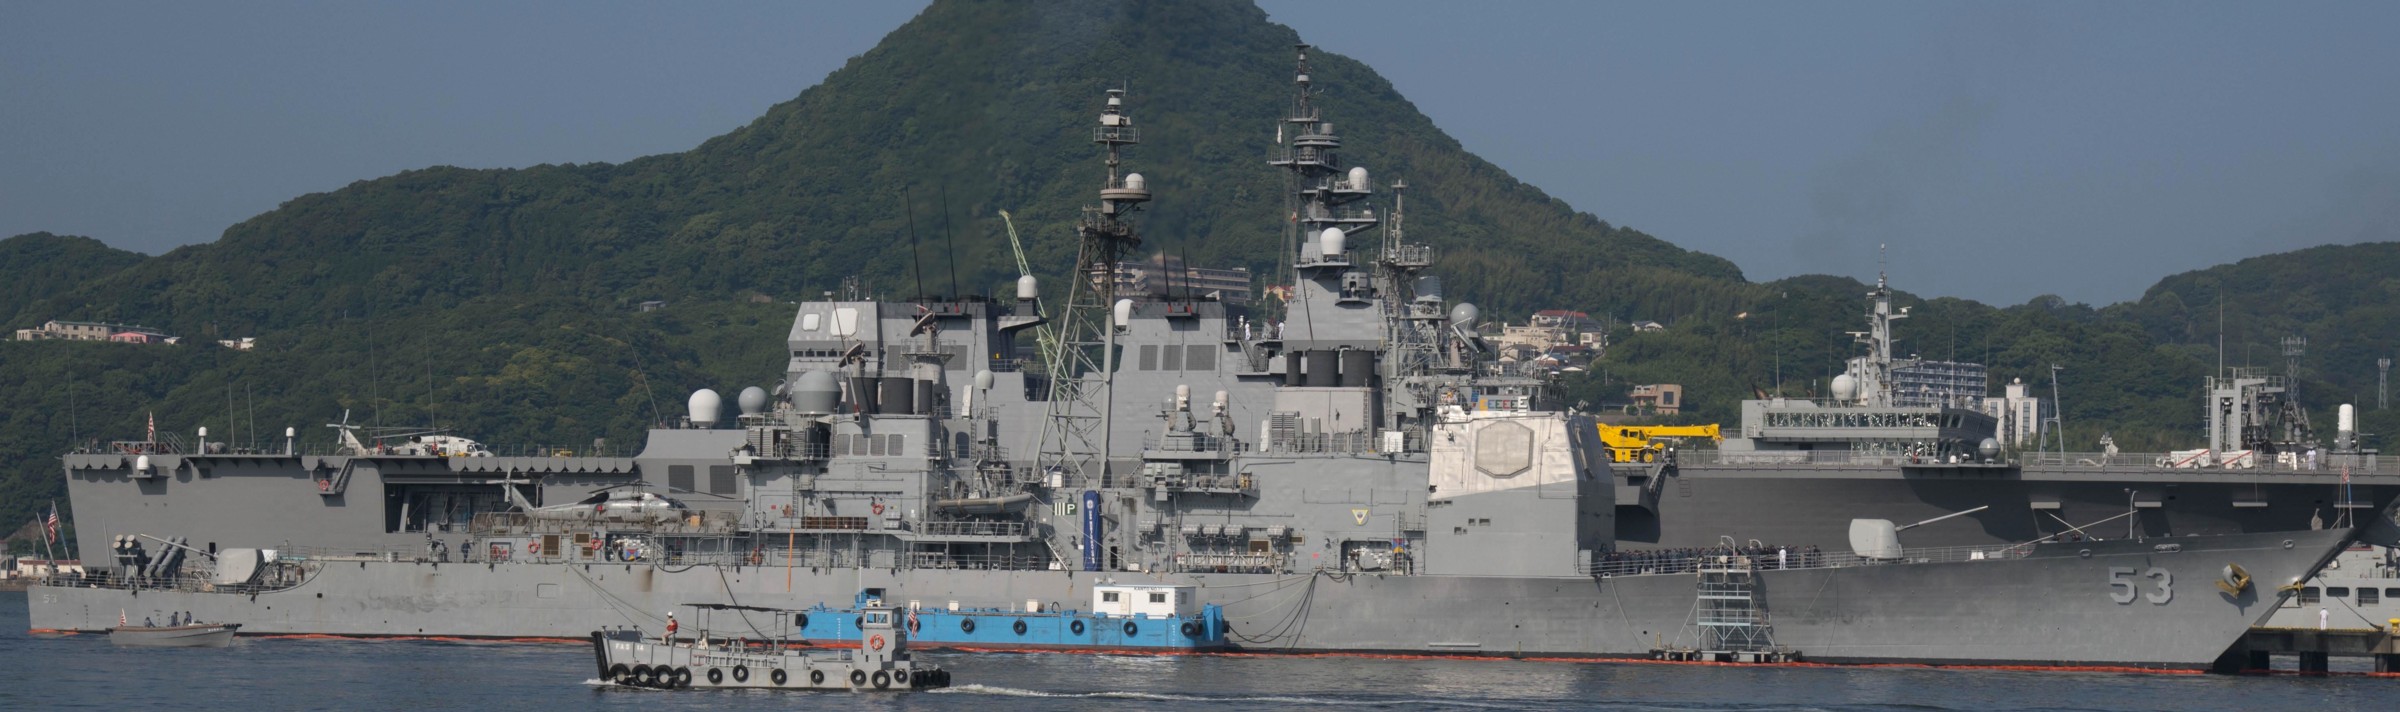 cg-53 uss mobile bay ticonderoga class guided missile cruiser aegis us navy sasebo japan 94